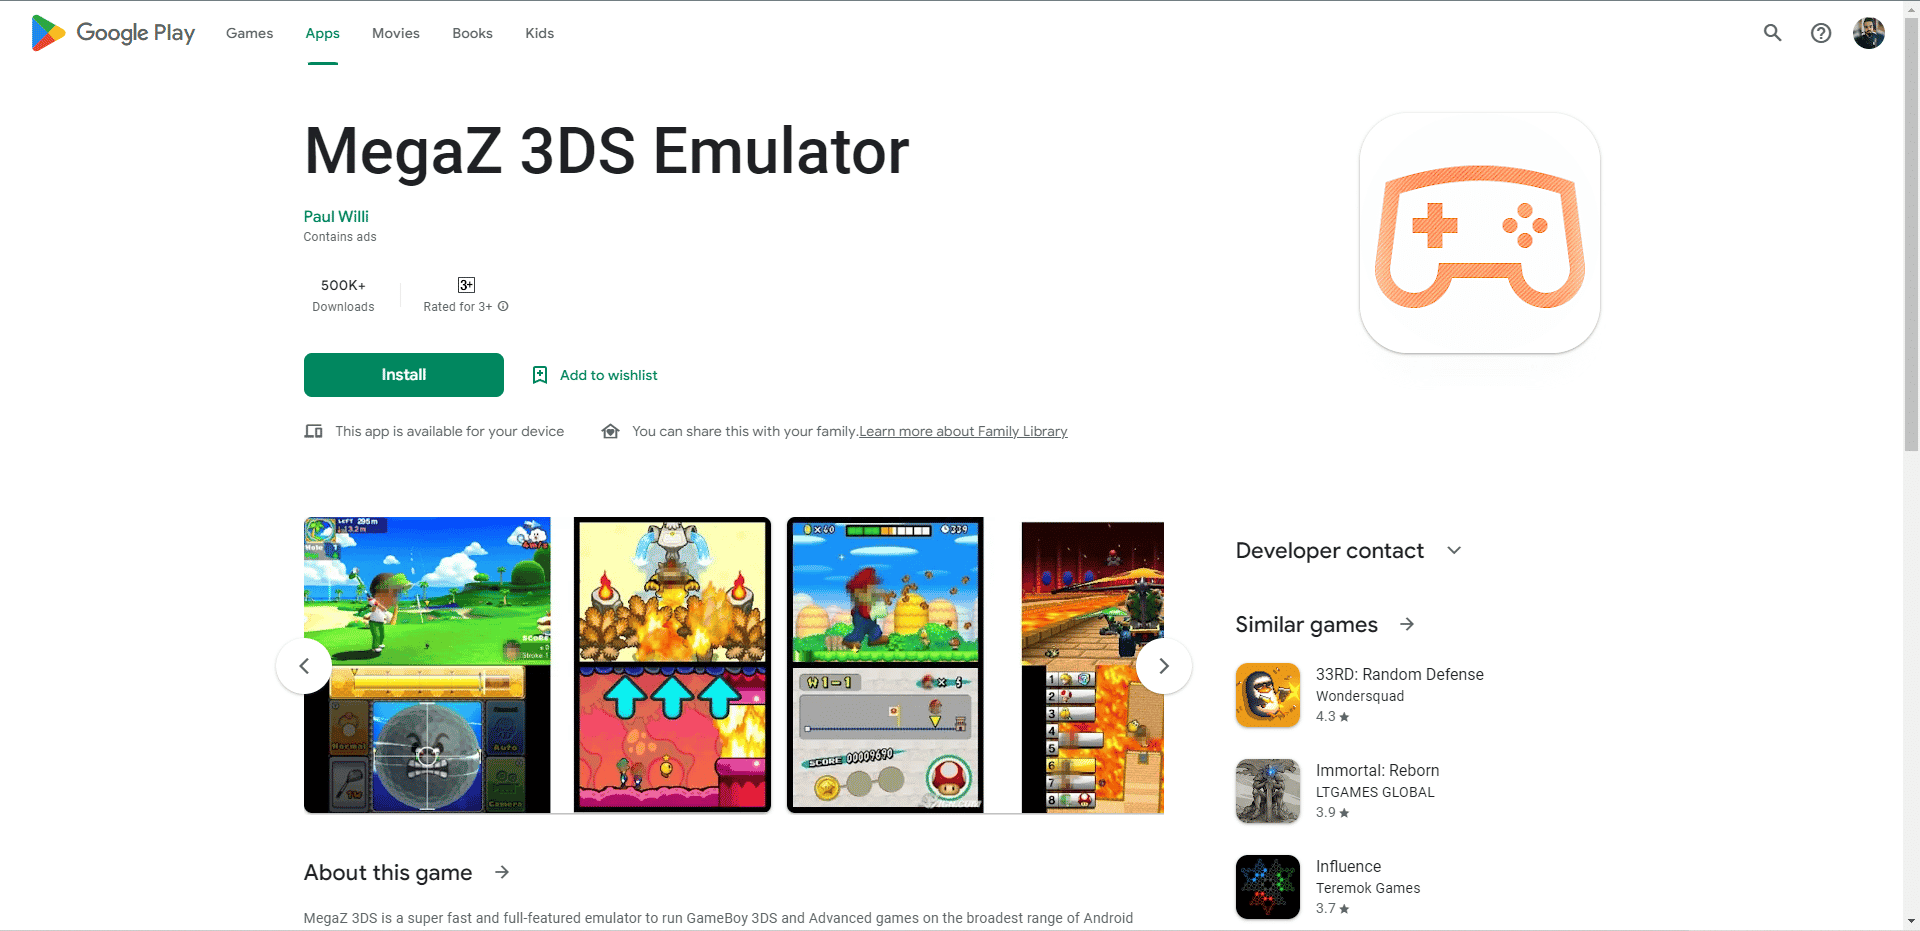 MegaZ 3DS Emulator play store webpage. Best 3D Emulator Download for Android APK